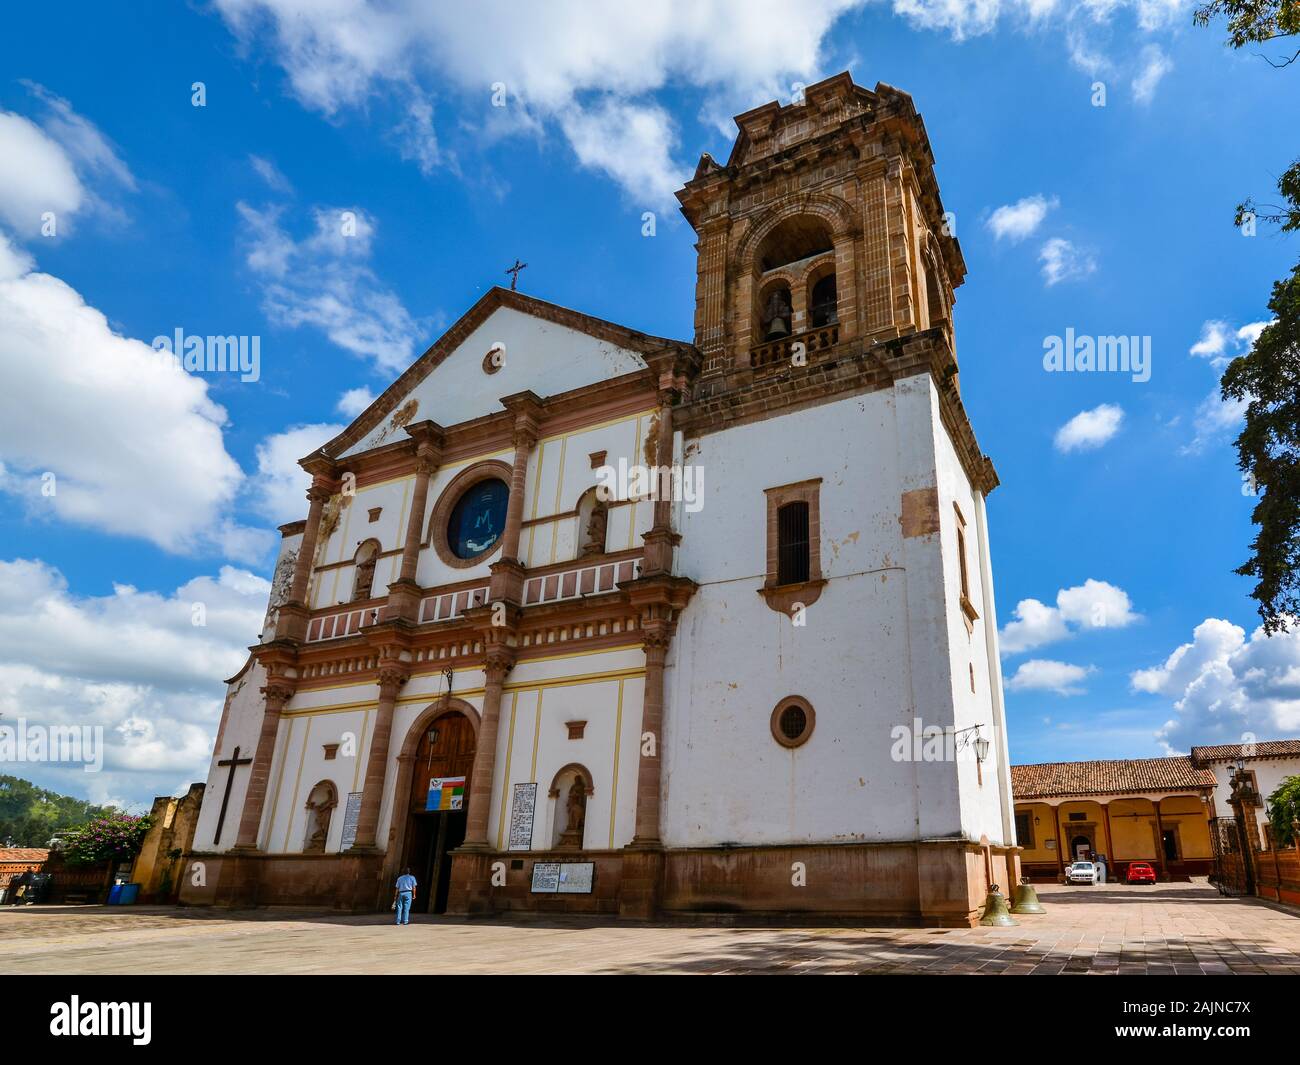 Basilica of Our Lady of Health - Patzcuaro, Michoacan, Mexico Stock Photo